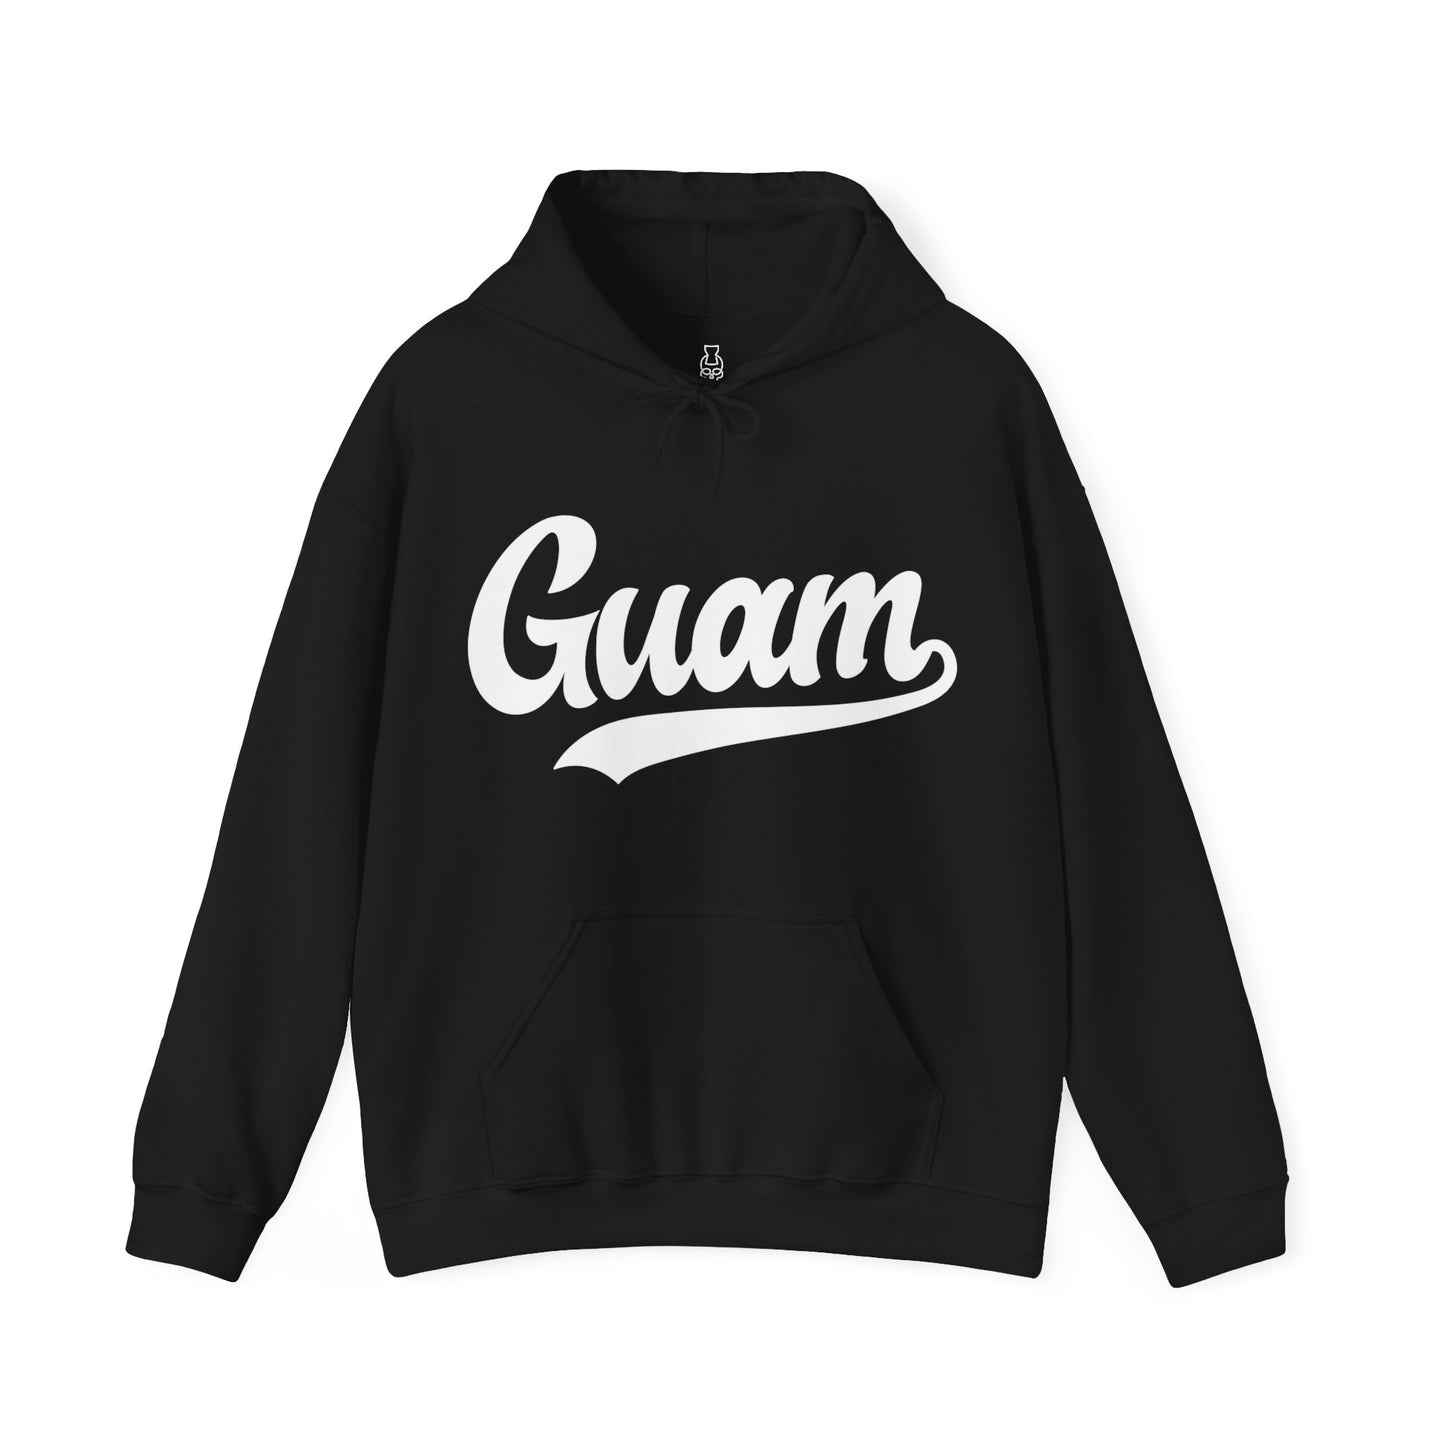 Guam Black Hooded Sweatshirt